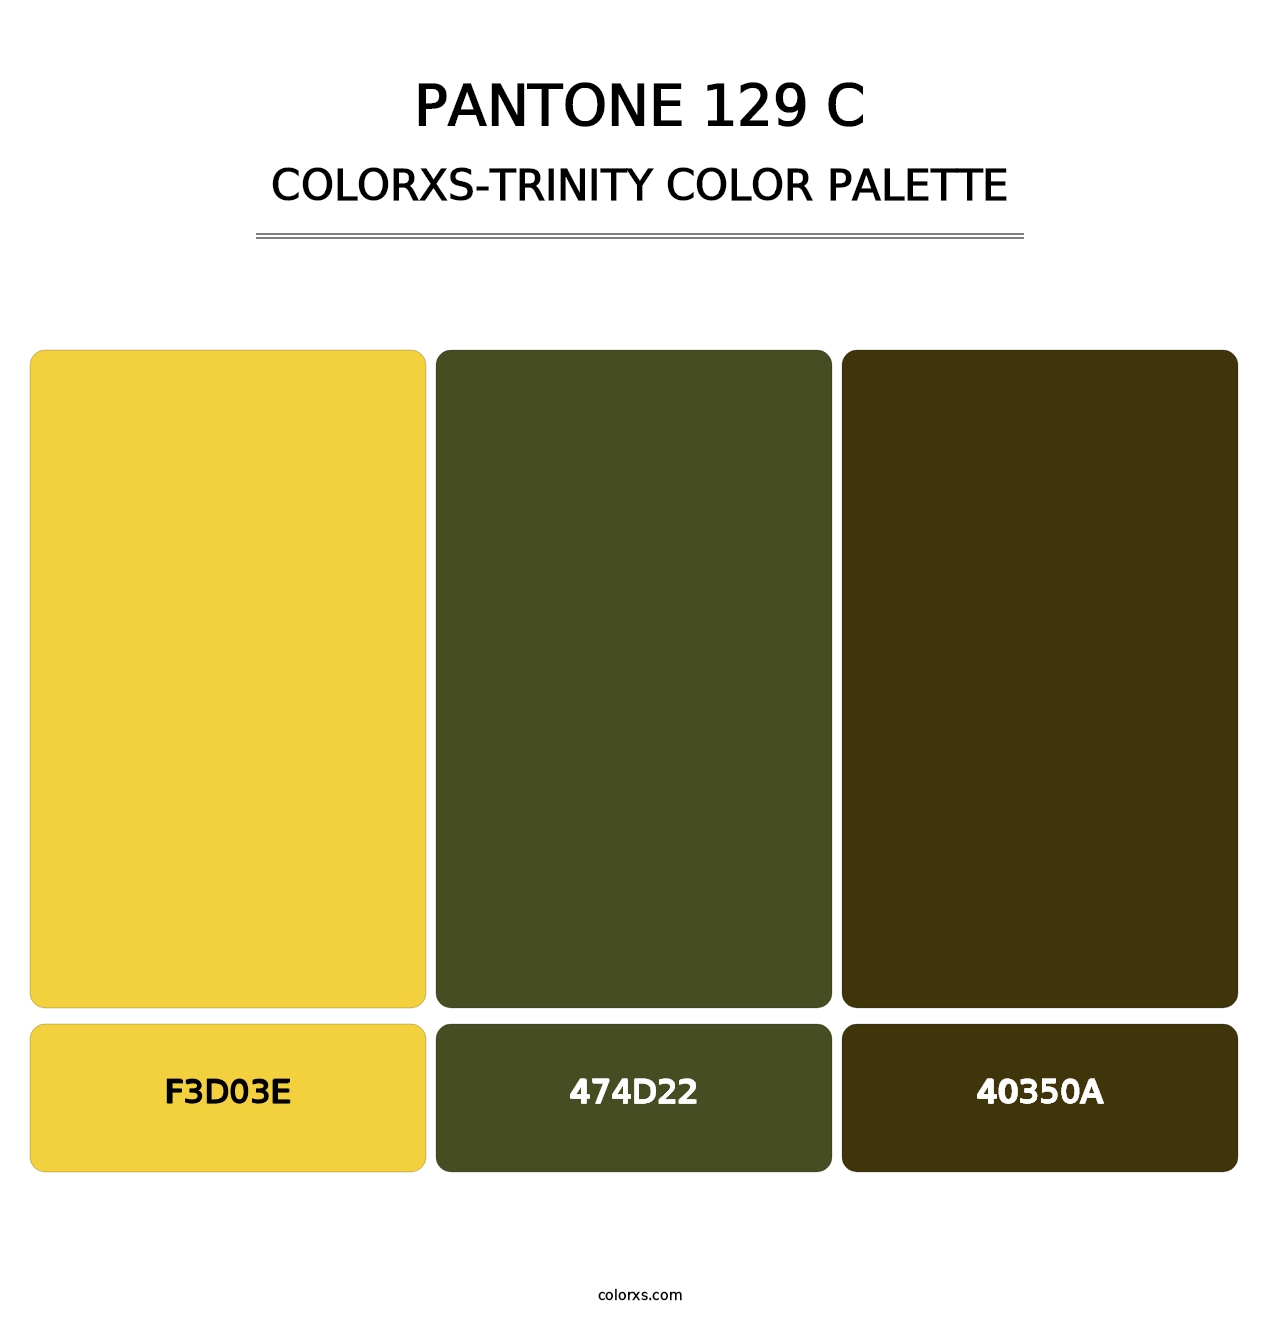 PANTONE 129 C - Colorxs Trinity Palette